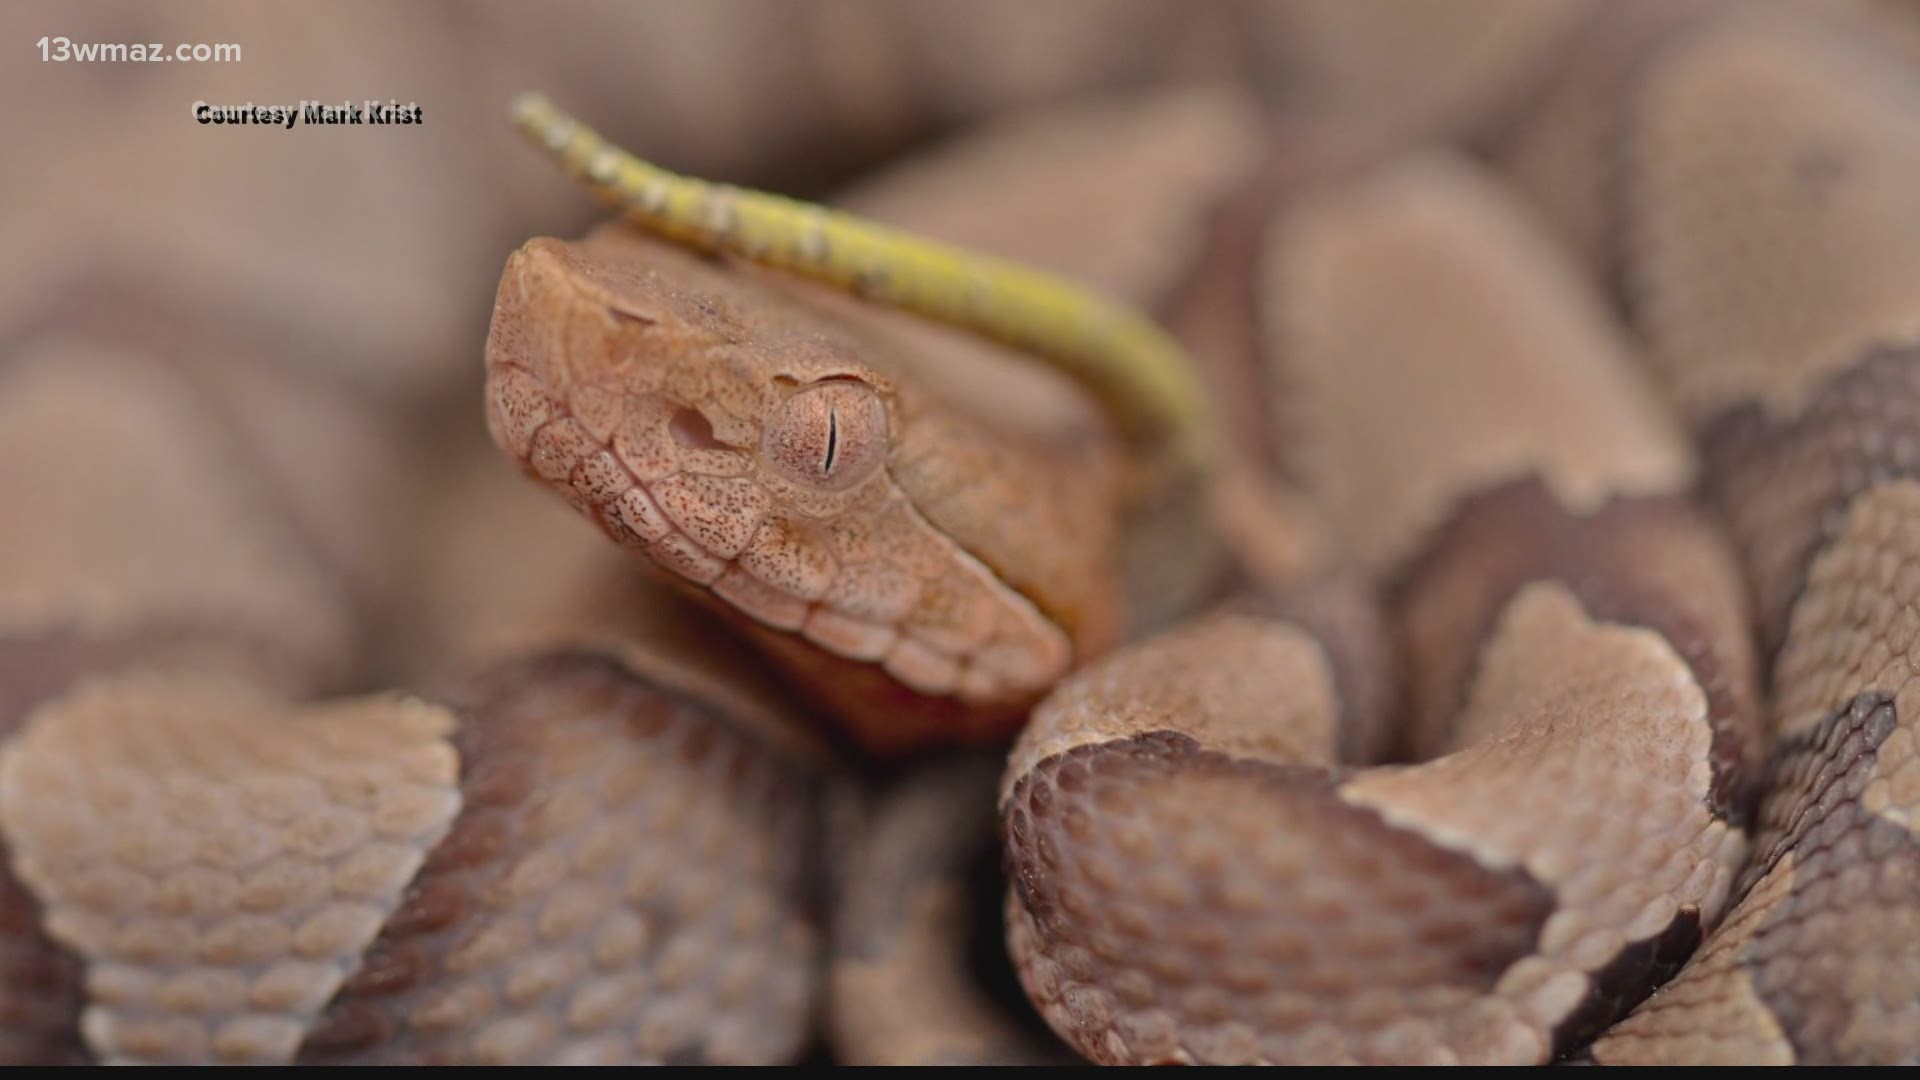 Copperheads are the most common venomous snake in Georgia